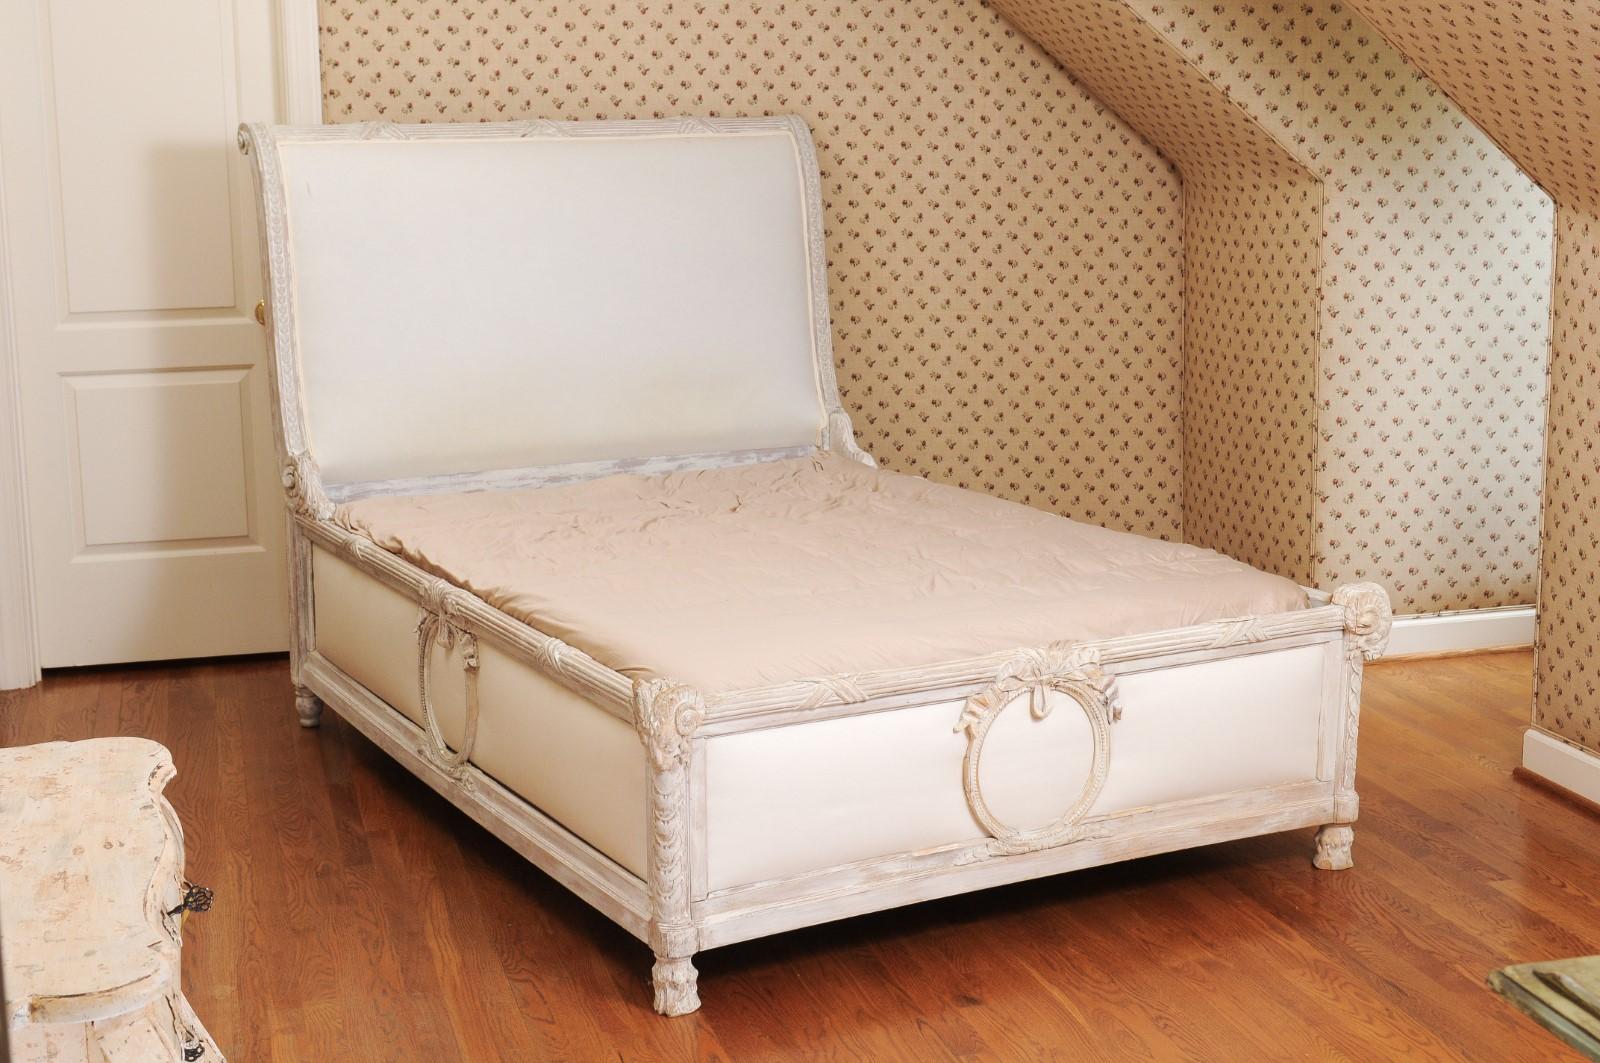 18th century bed